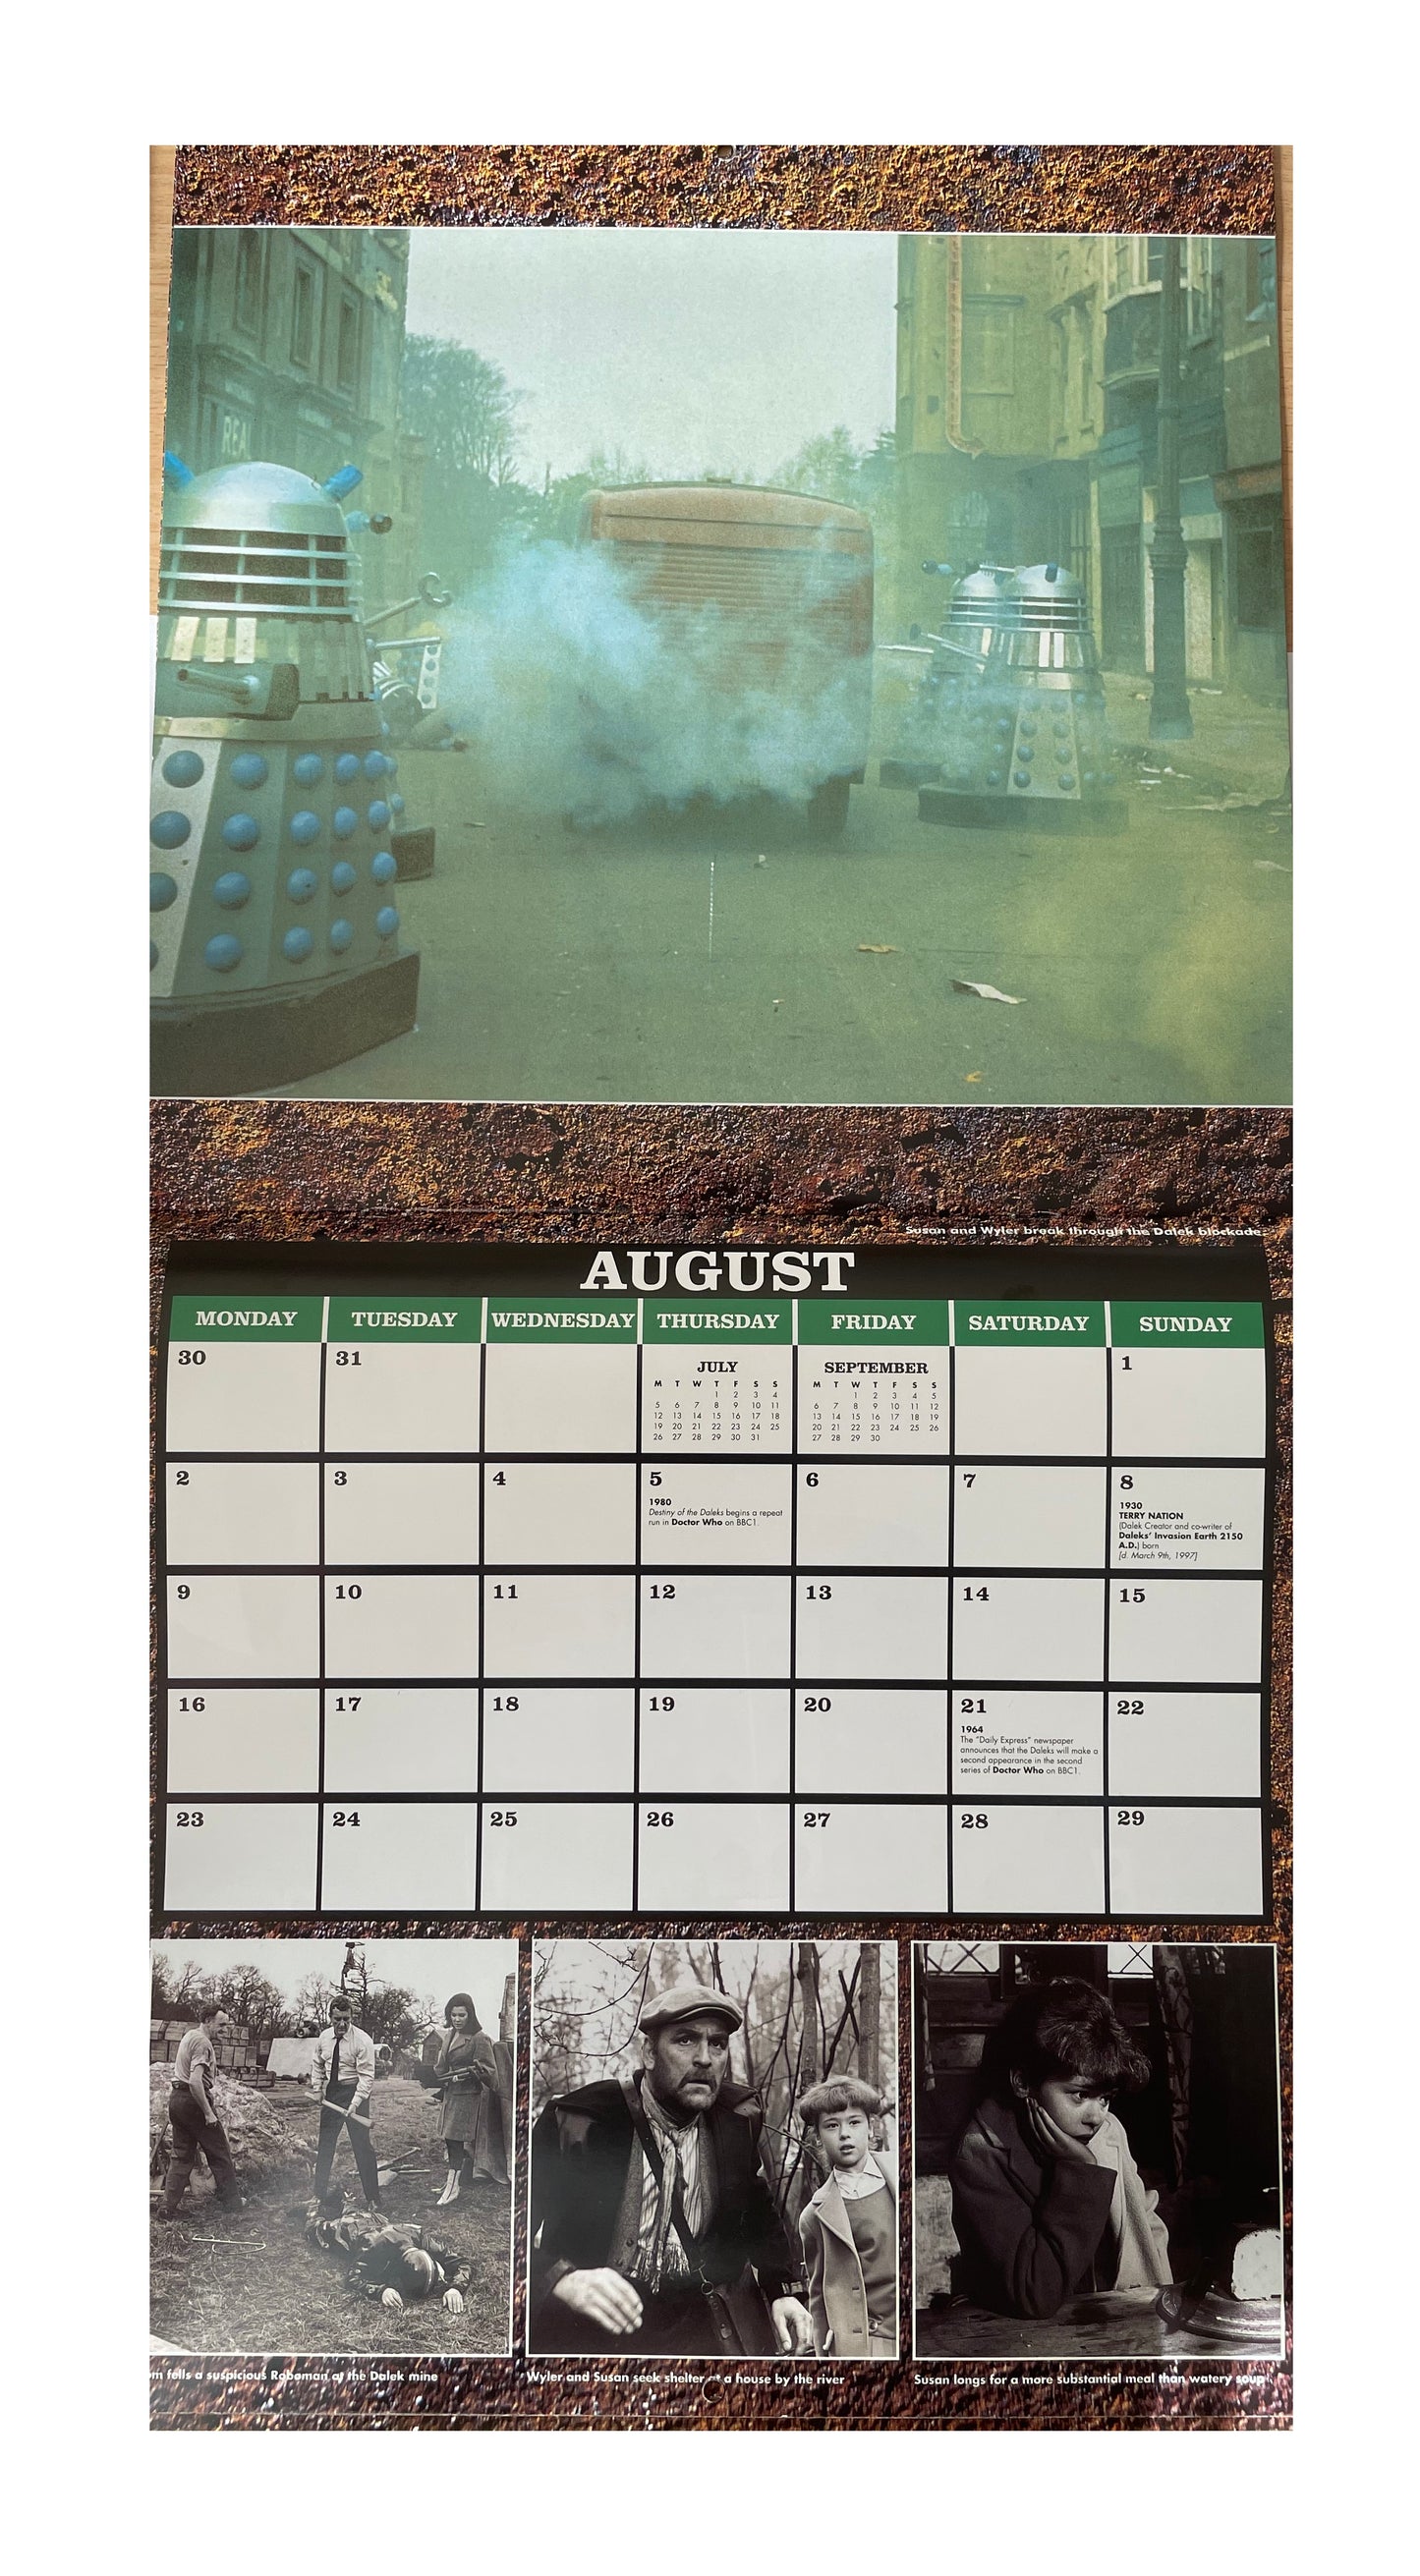 Vintage Doctor Who Daleks Invasion Earth 2150 A.D. The Official Calendar 1999 - Former Shop Stock